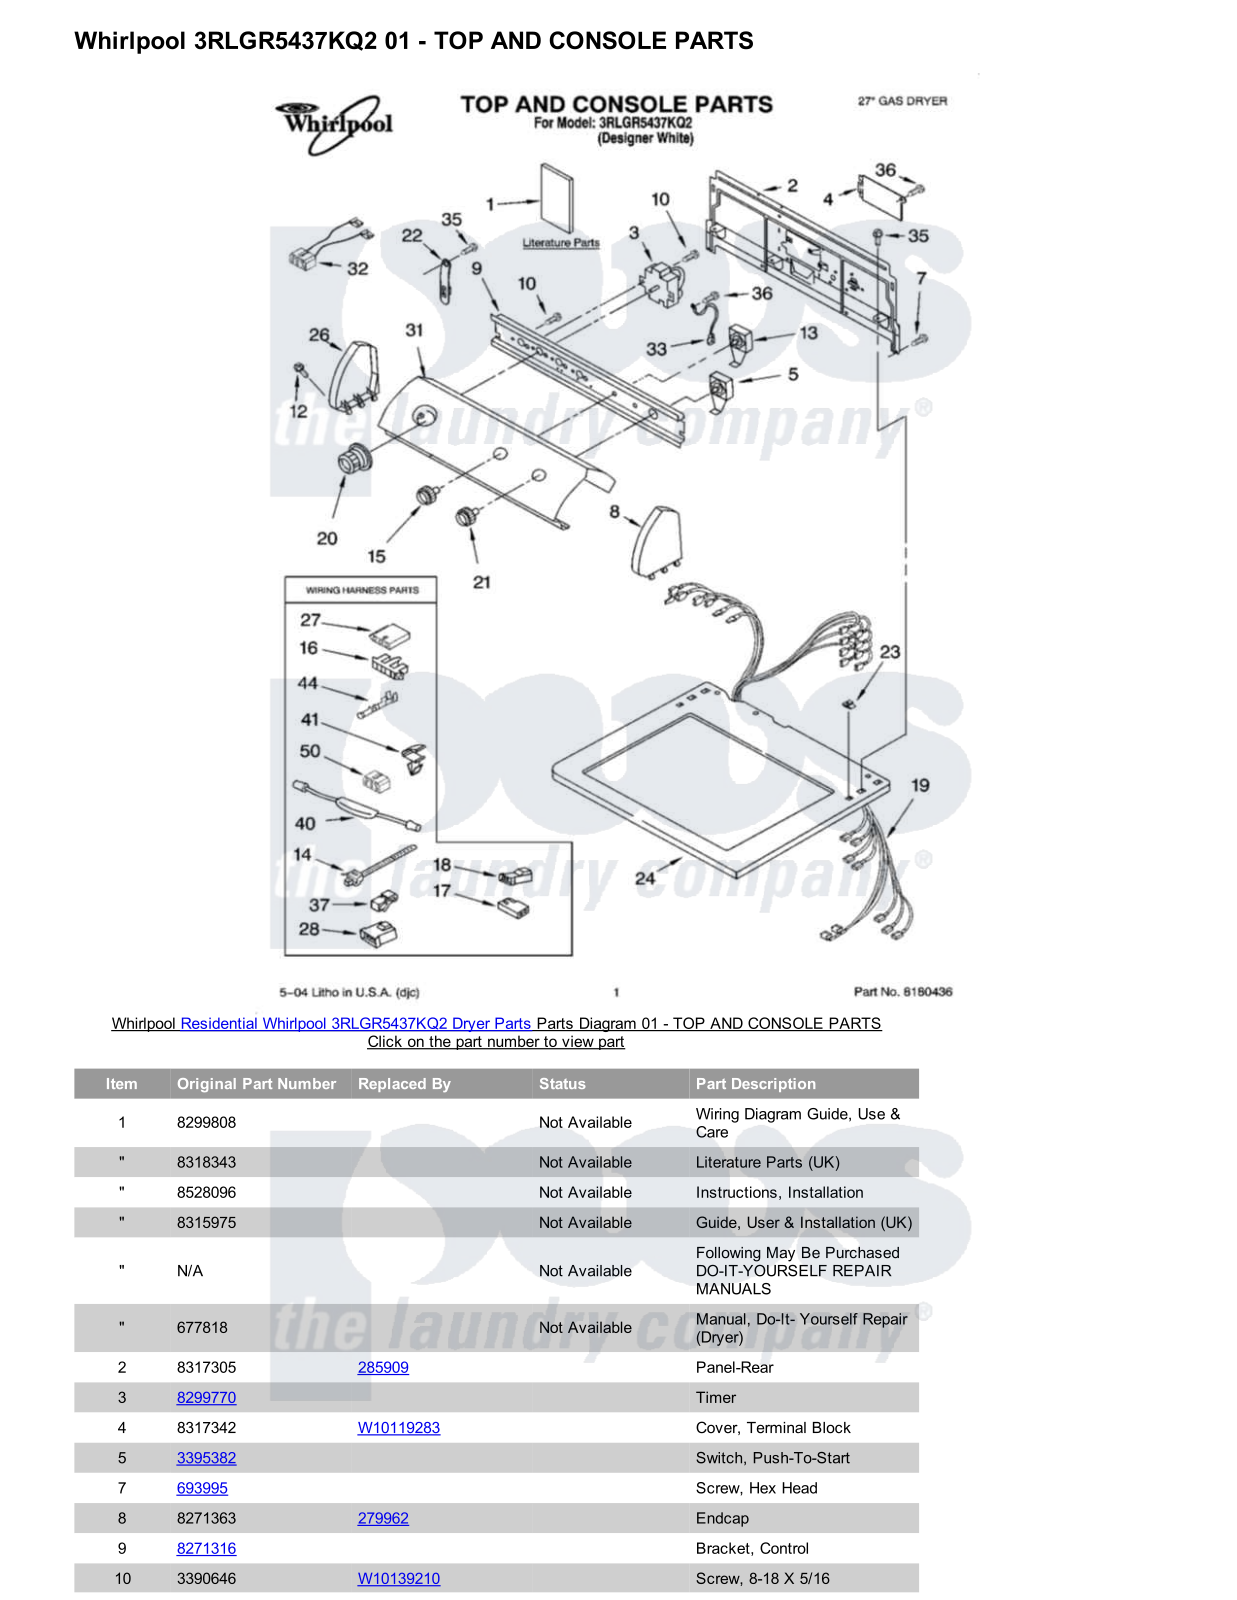 Whirlpool 3RLGR5437KQ2 Parts Diagram